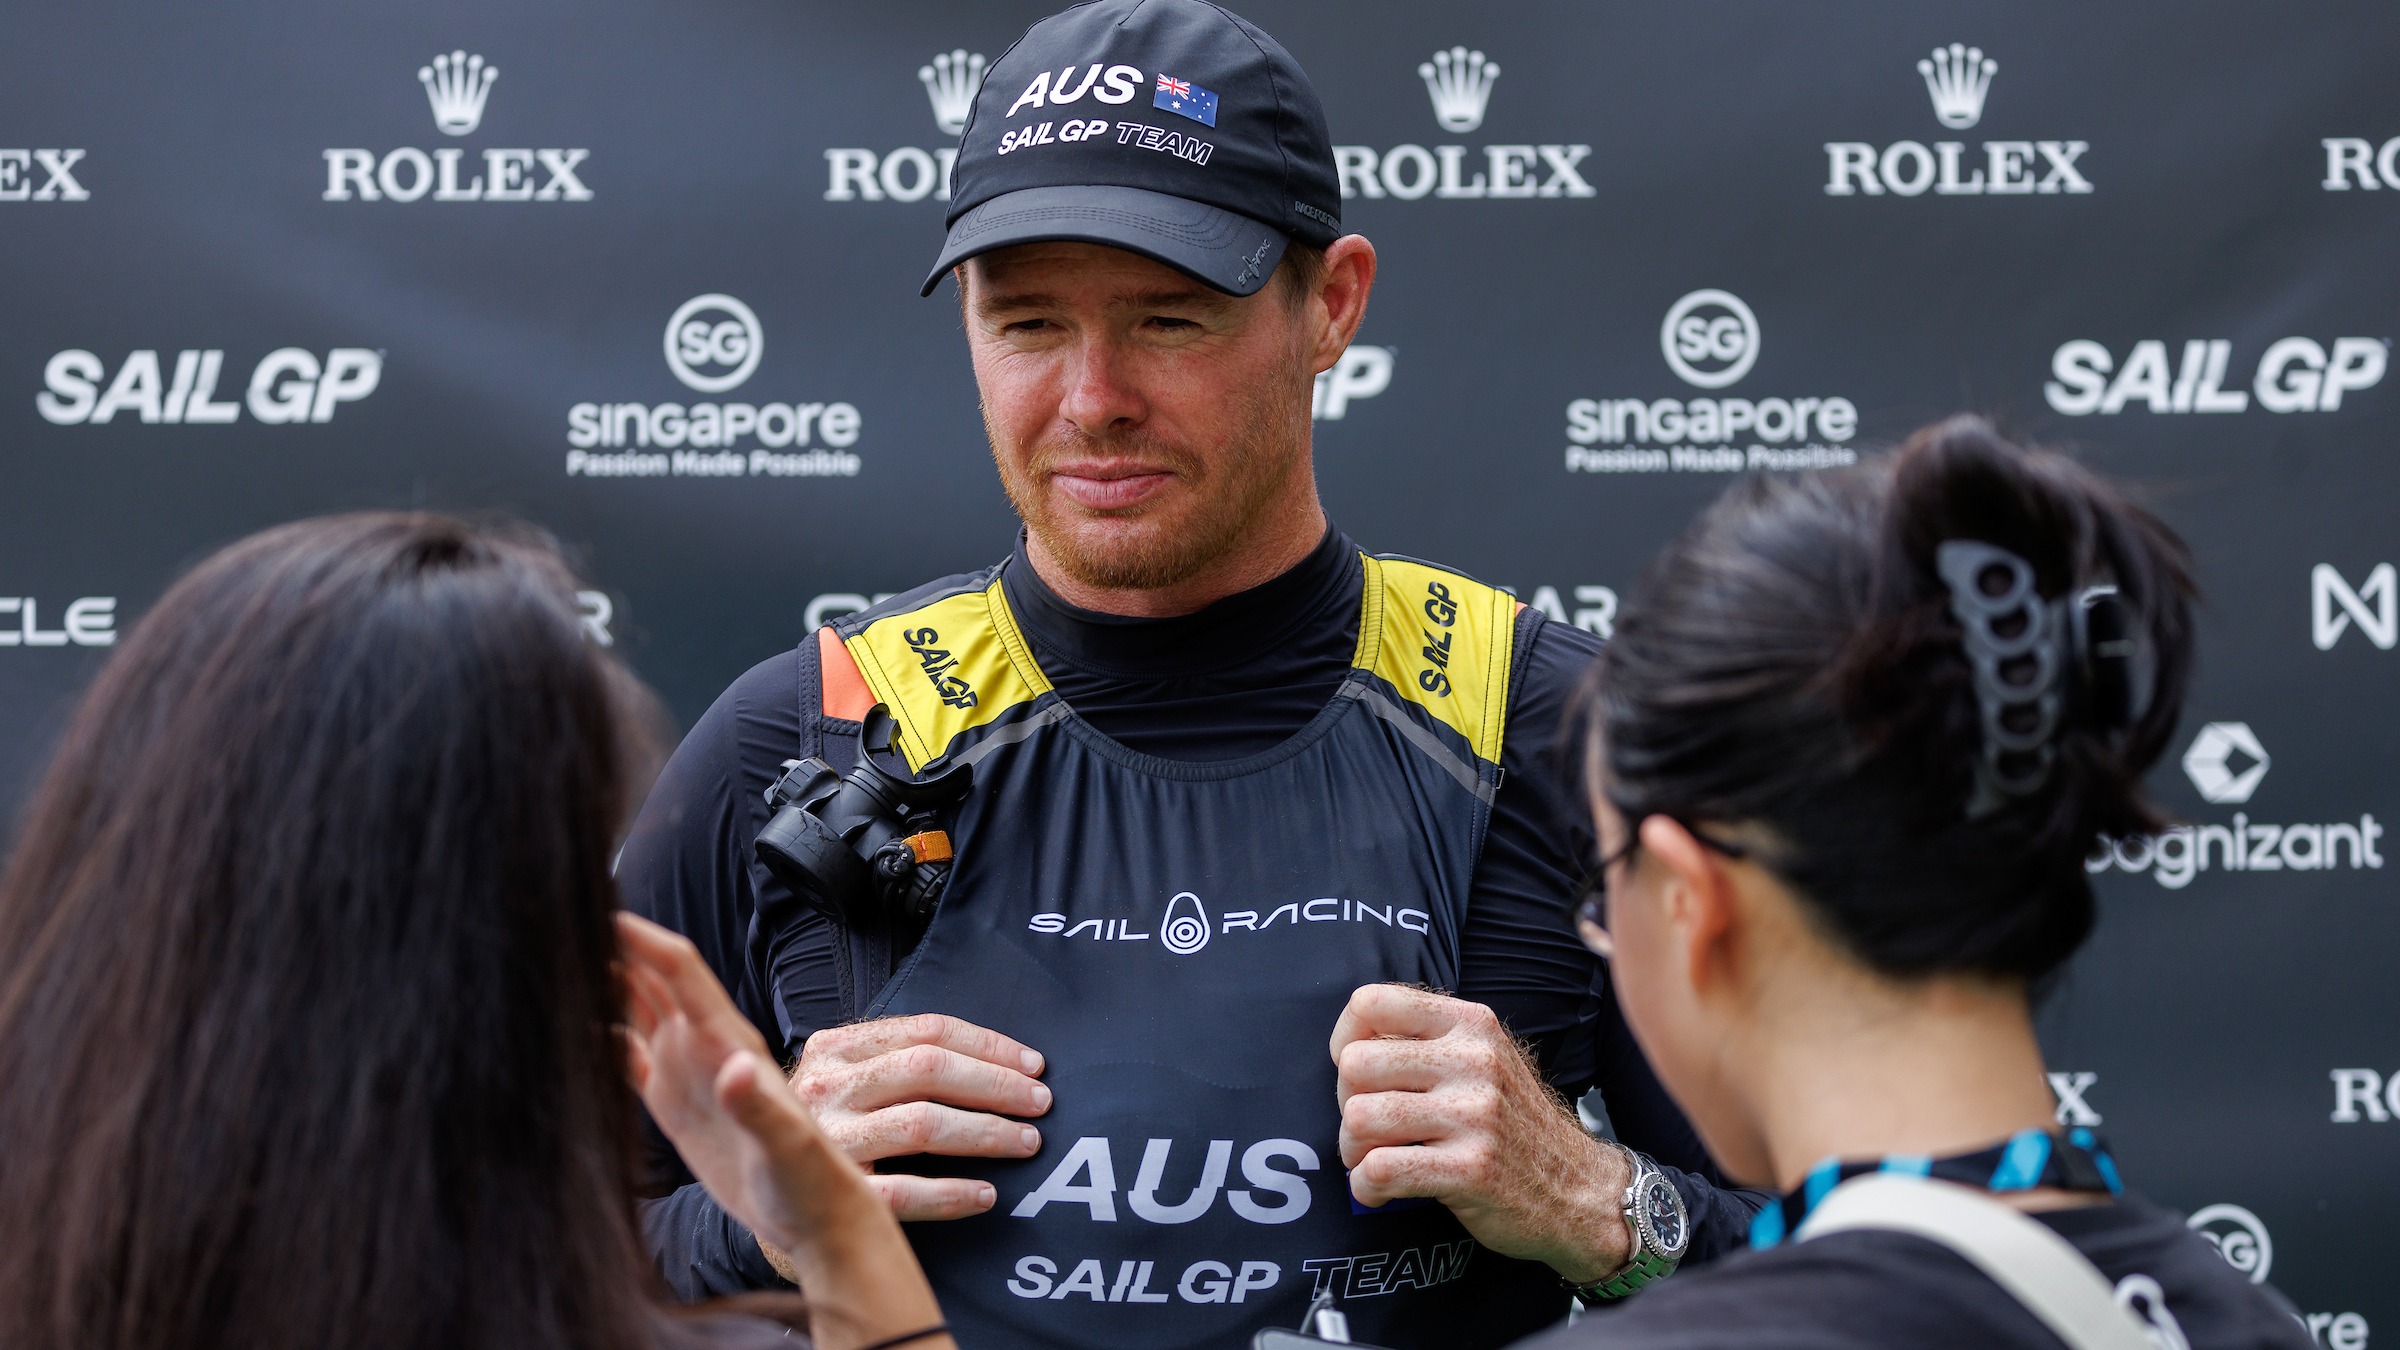 Season 3 // Singapore Sail Grand Prix // Tom Slingsby at the Mixed Zone